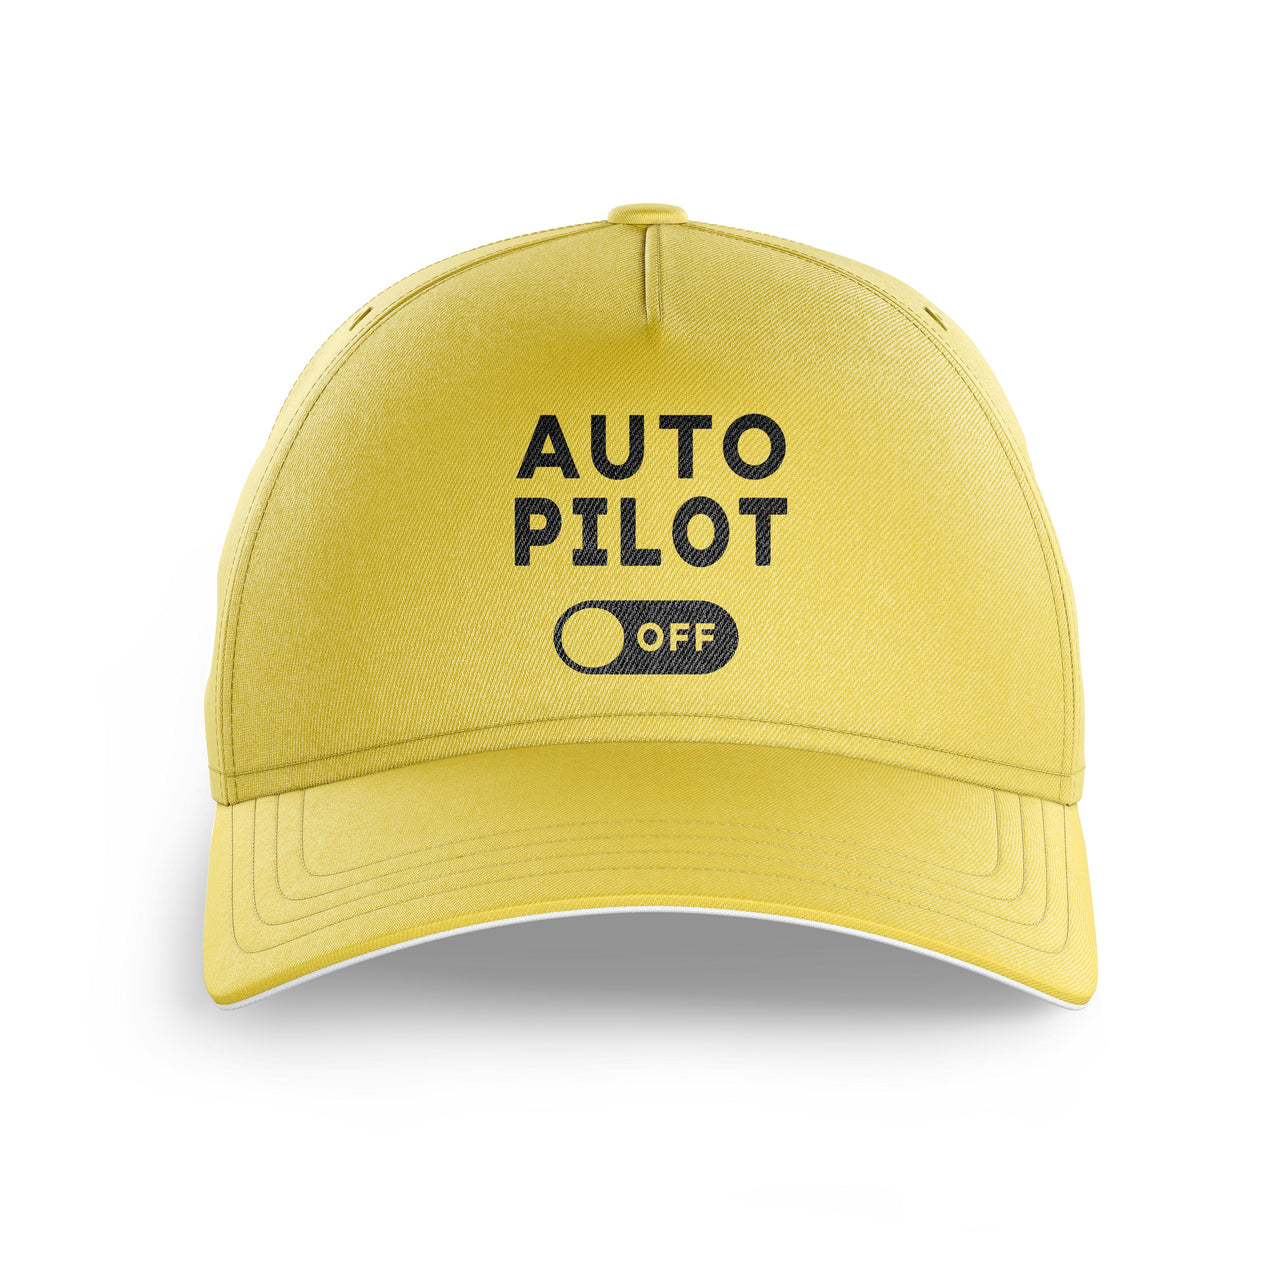 Auto Pilot Off Printed Hats